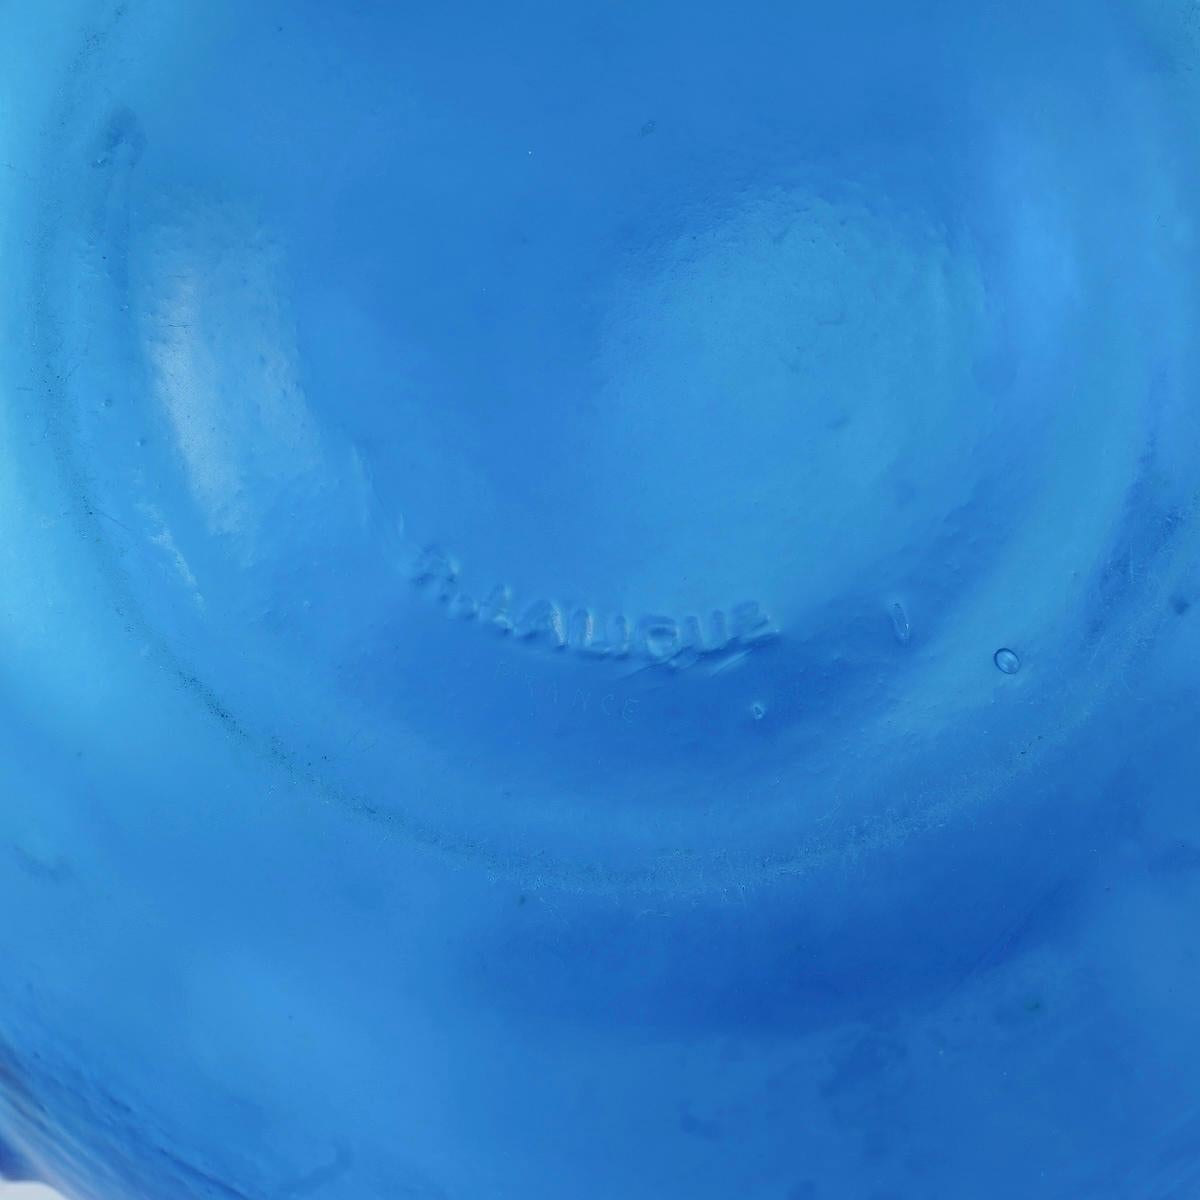 French 1914 René Lalique - Vase Courges Electric Blue Glass For Sale